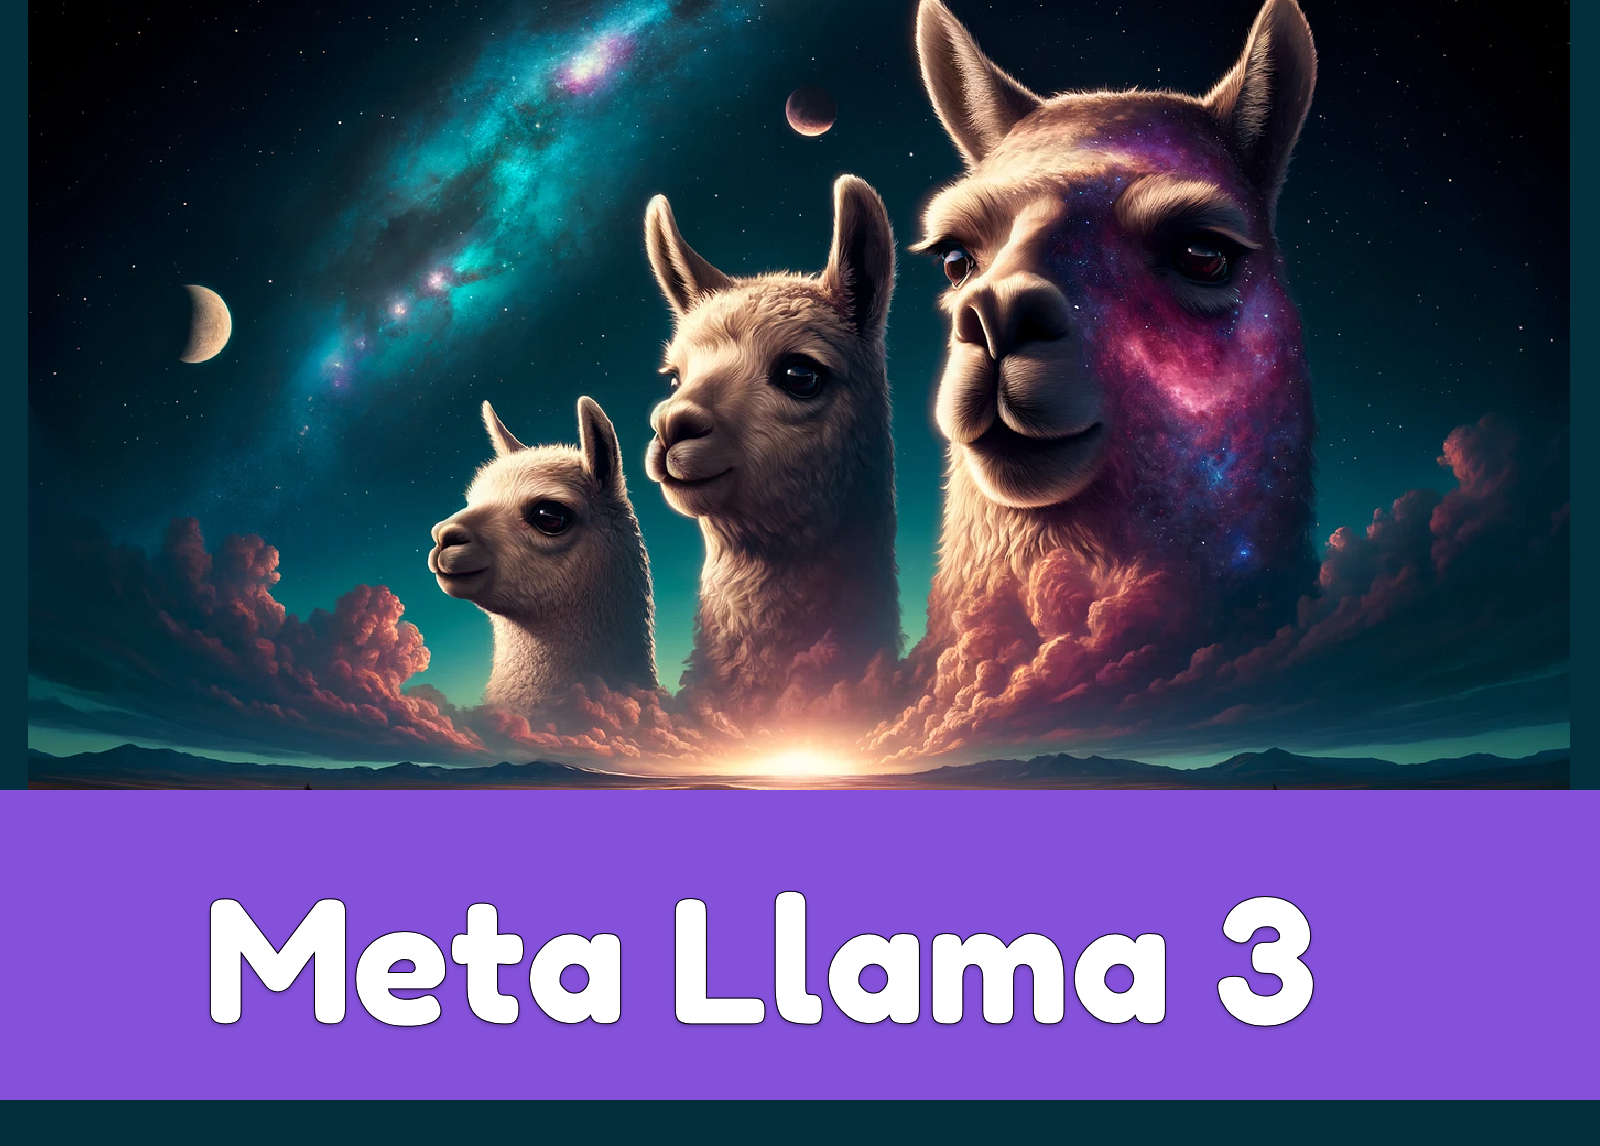 Meta Llama 3: Newest of the Llama Model family is Crashing the Party